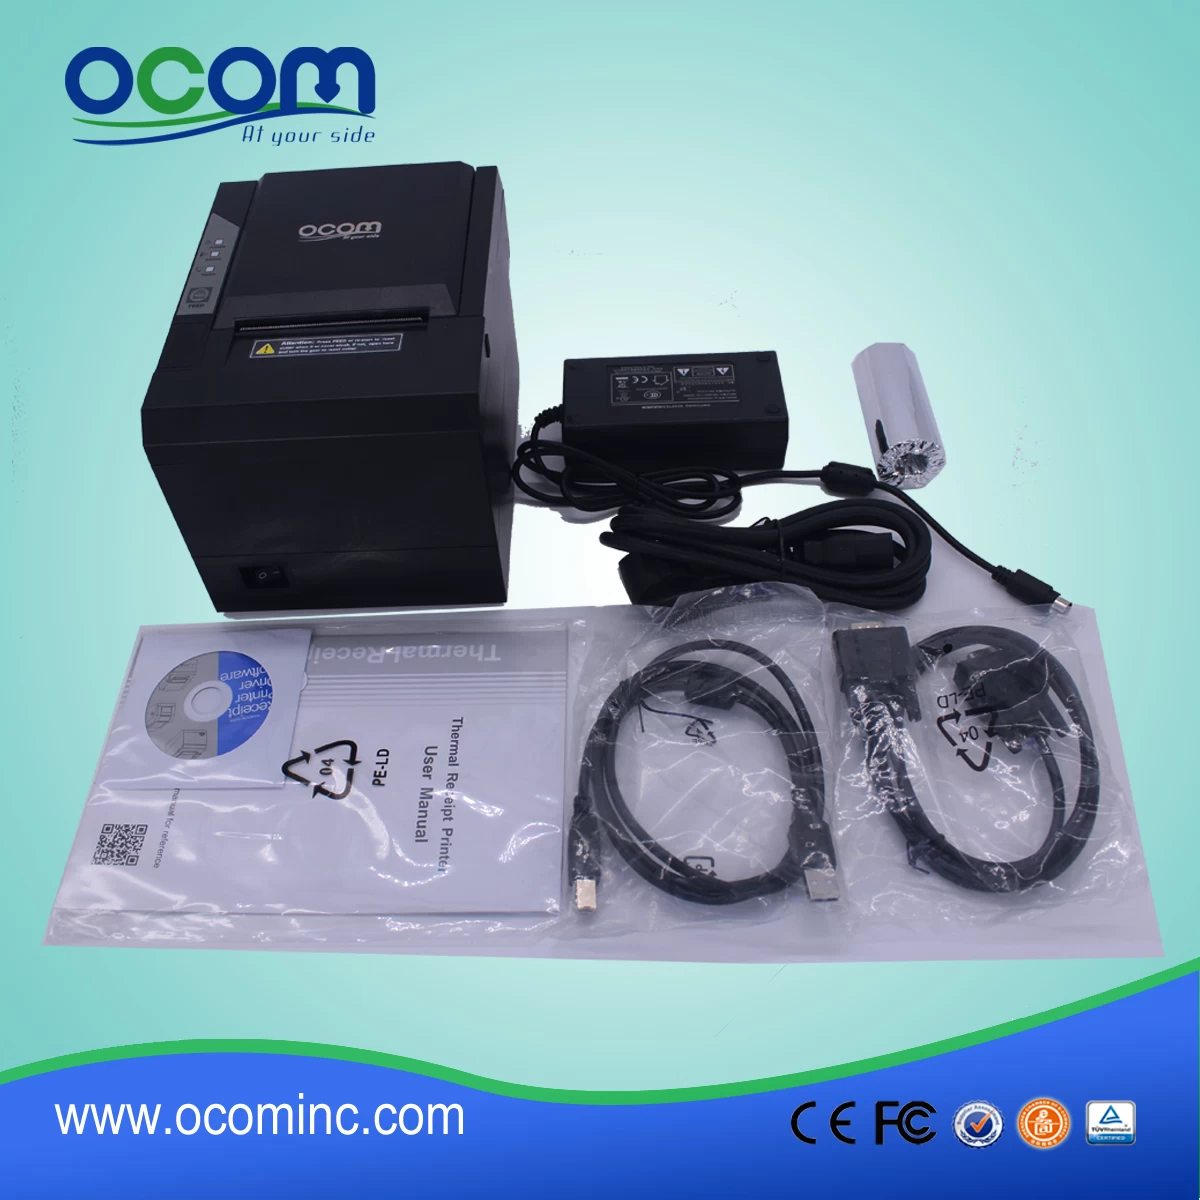 OCPP-80G heavy duty bill printing machine price cheap